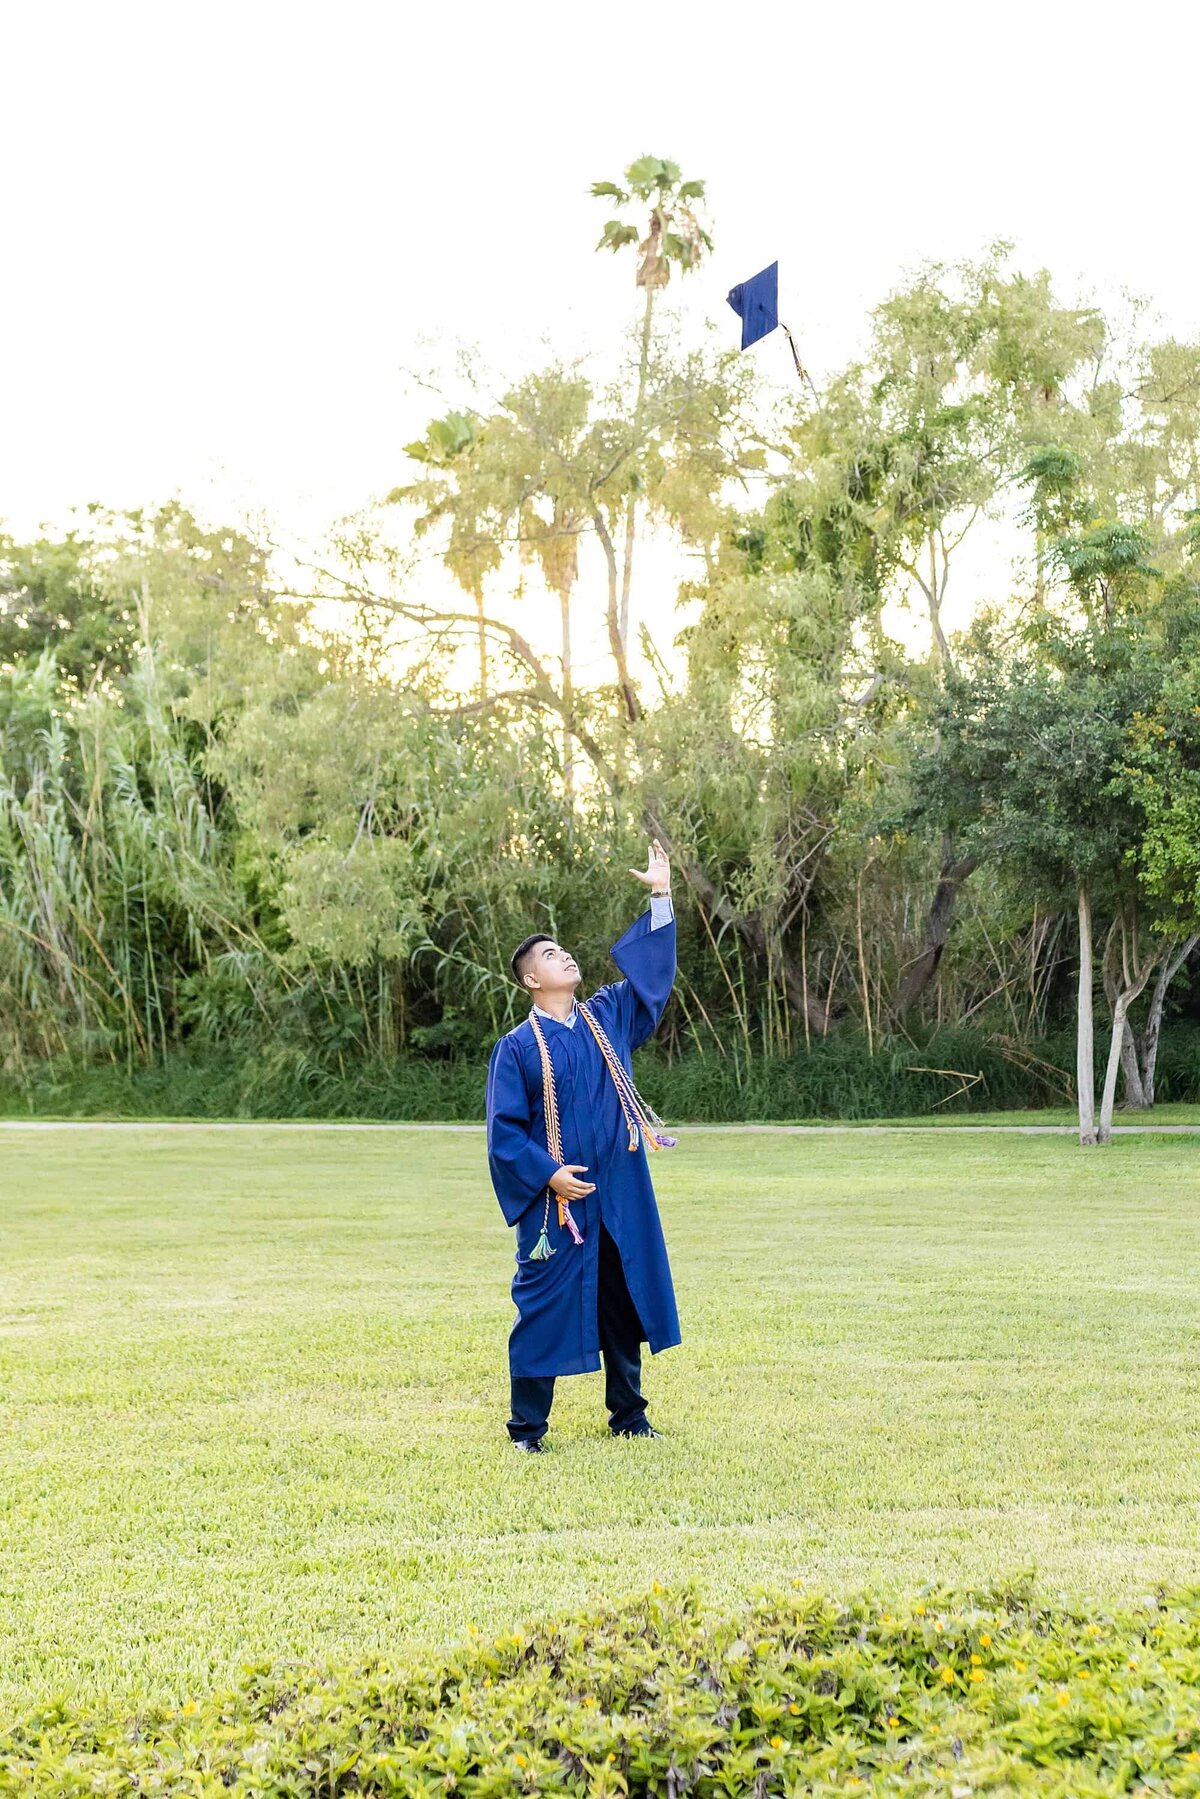 Senior in blue cap and gown tossing cap